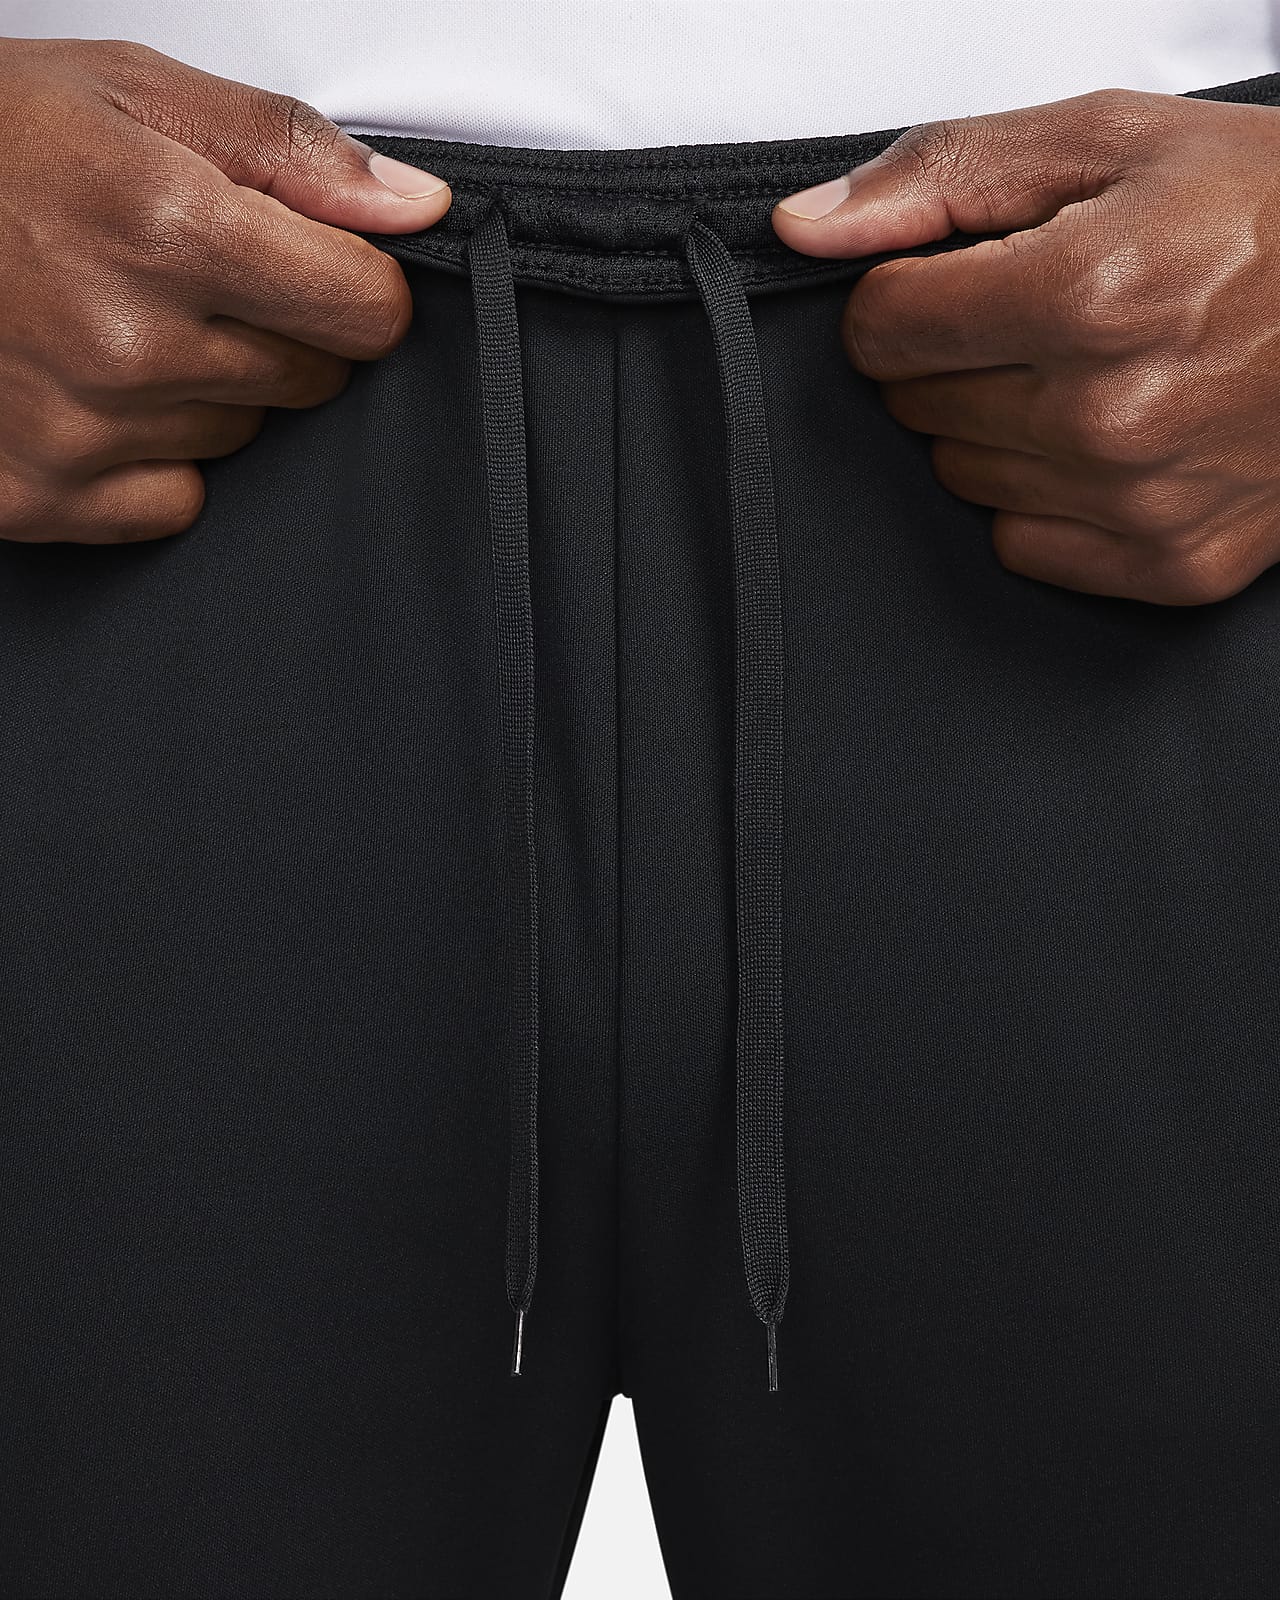 Nike Mens Therma Training Pants – Polished Toyki